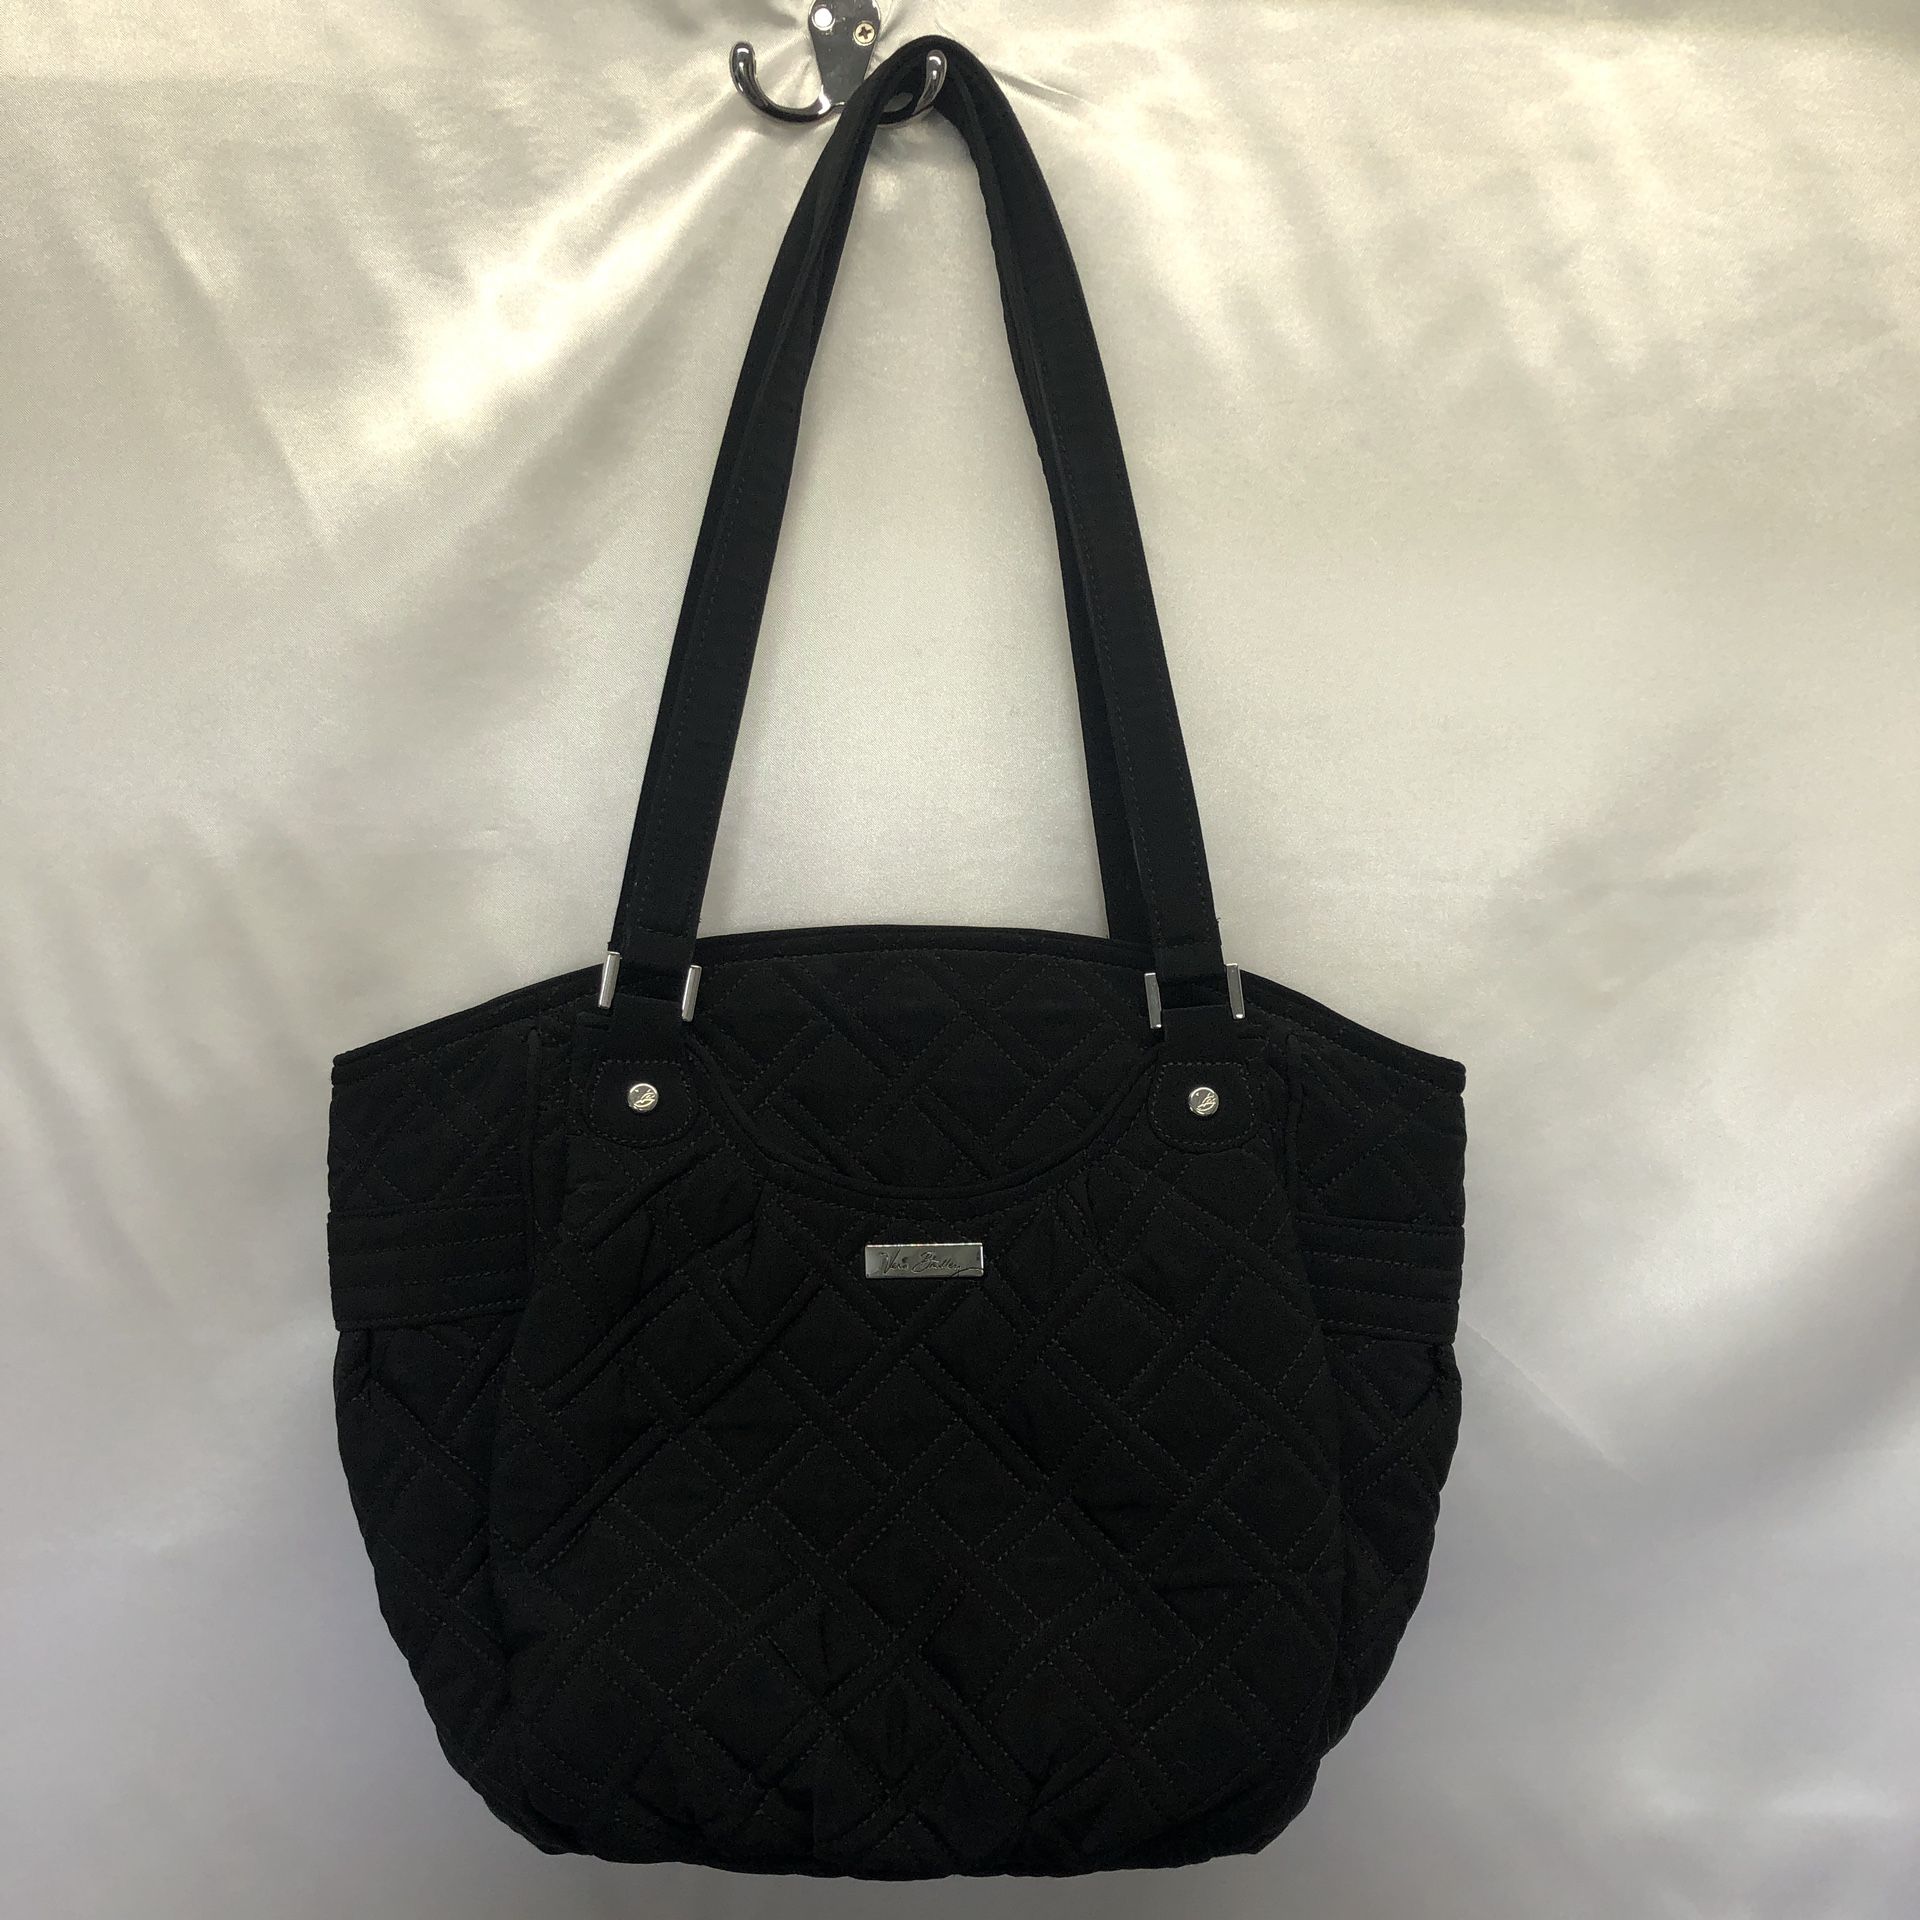 Vera Bradley Black Microfiber Glenna Shoulder Bag Tote Purse Handbag